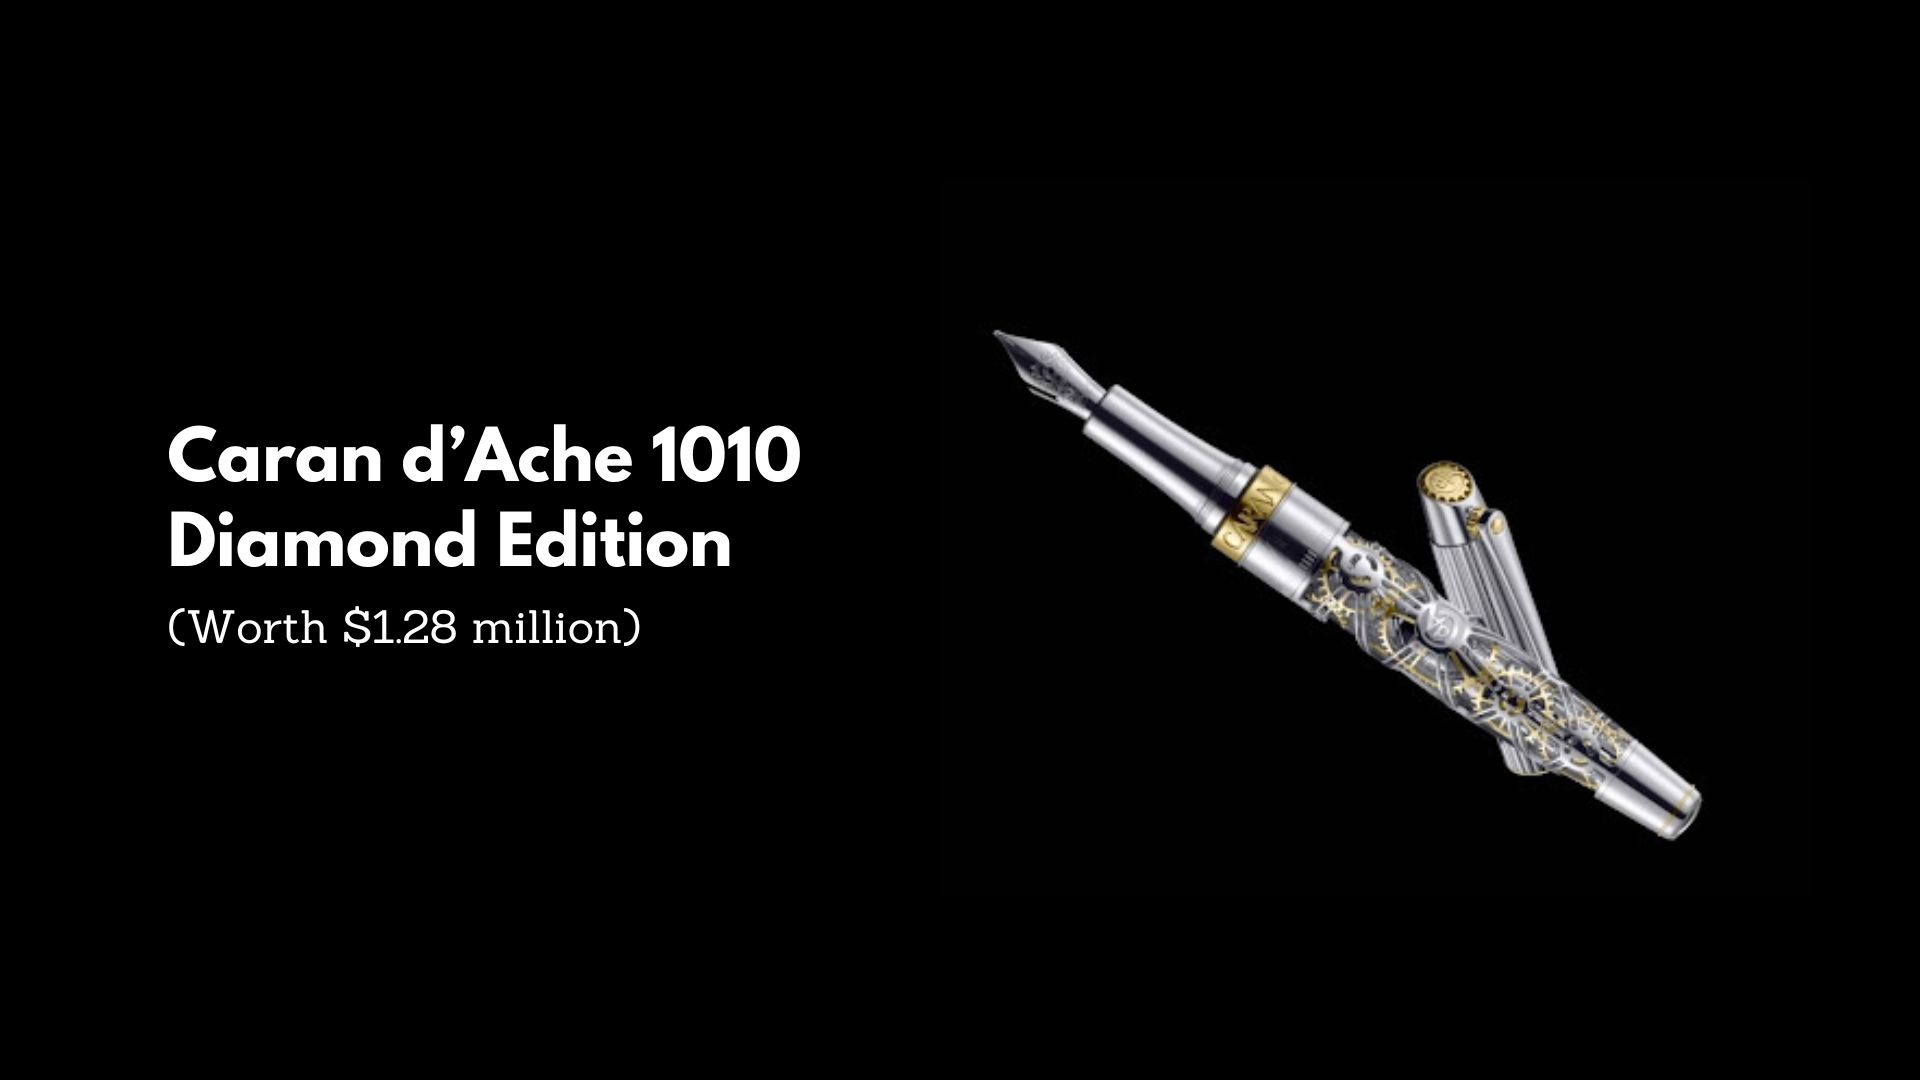 Caran d’Ache 1010 Diamond Edition - (Worth $1.28 Million) Most expensive pen